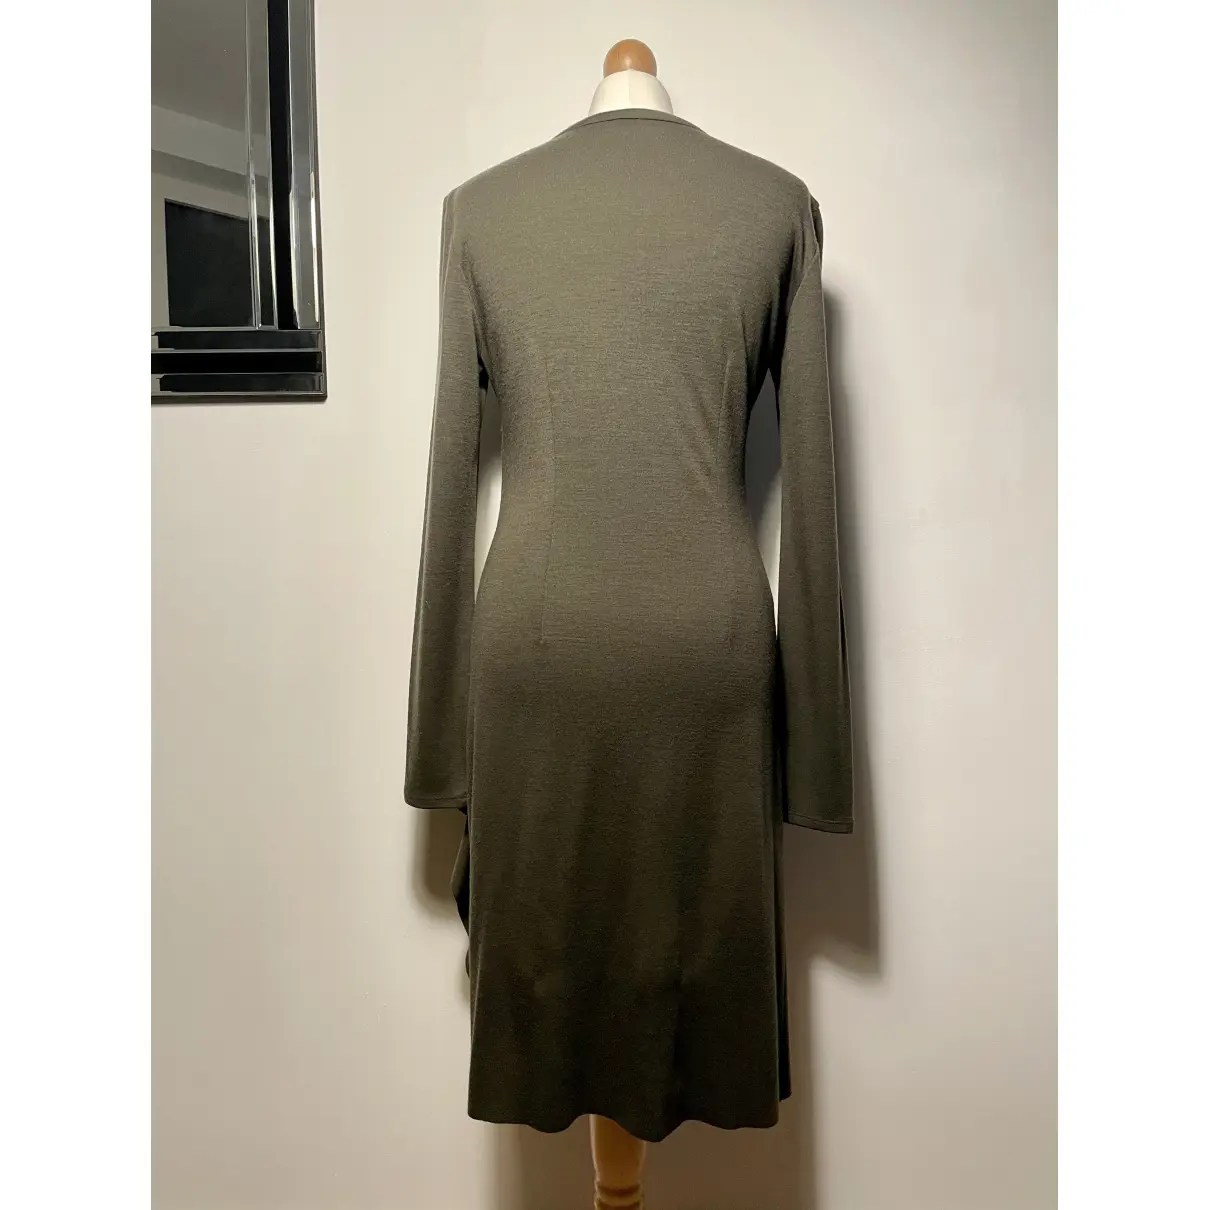 Buy Joseph Wool mid-length dress online